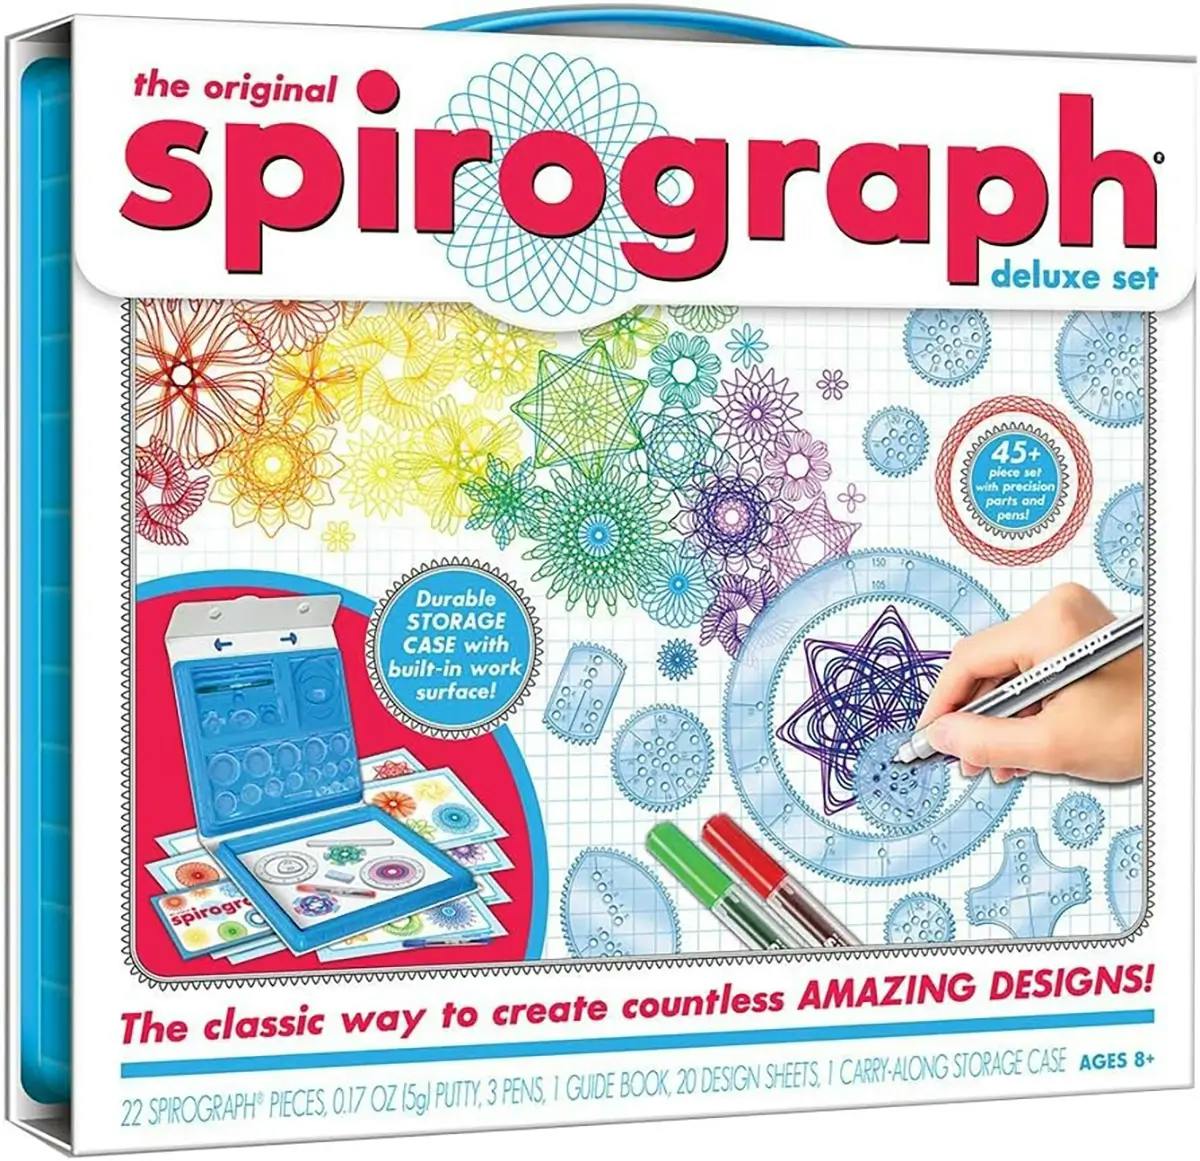 Spirograph activity set for kids.